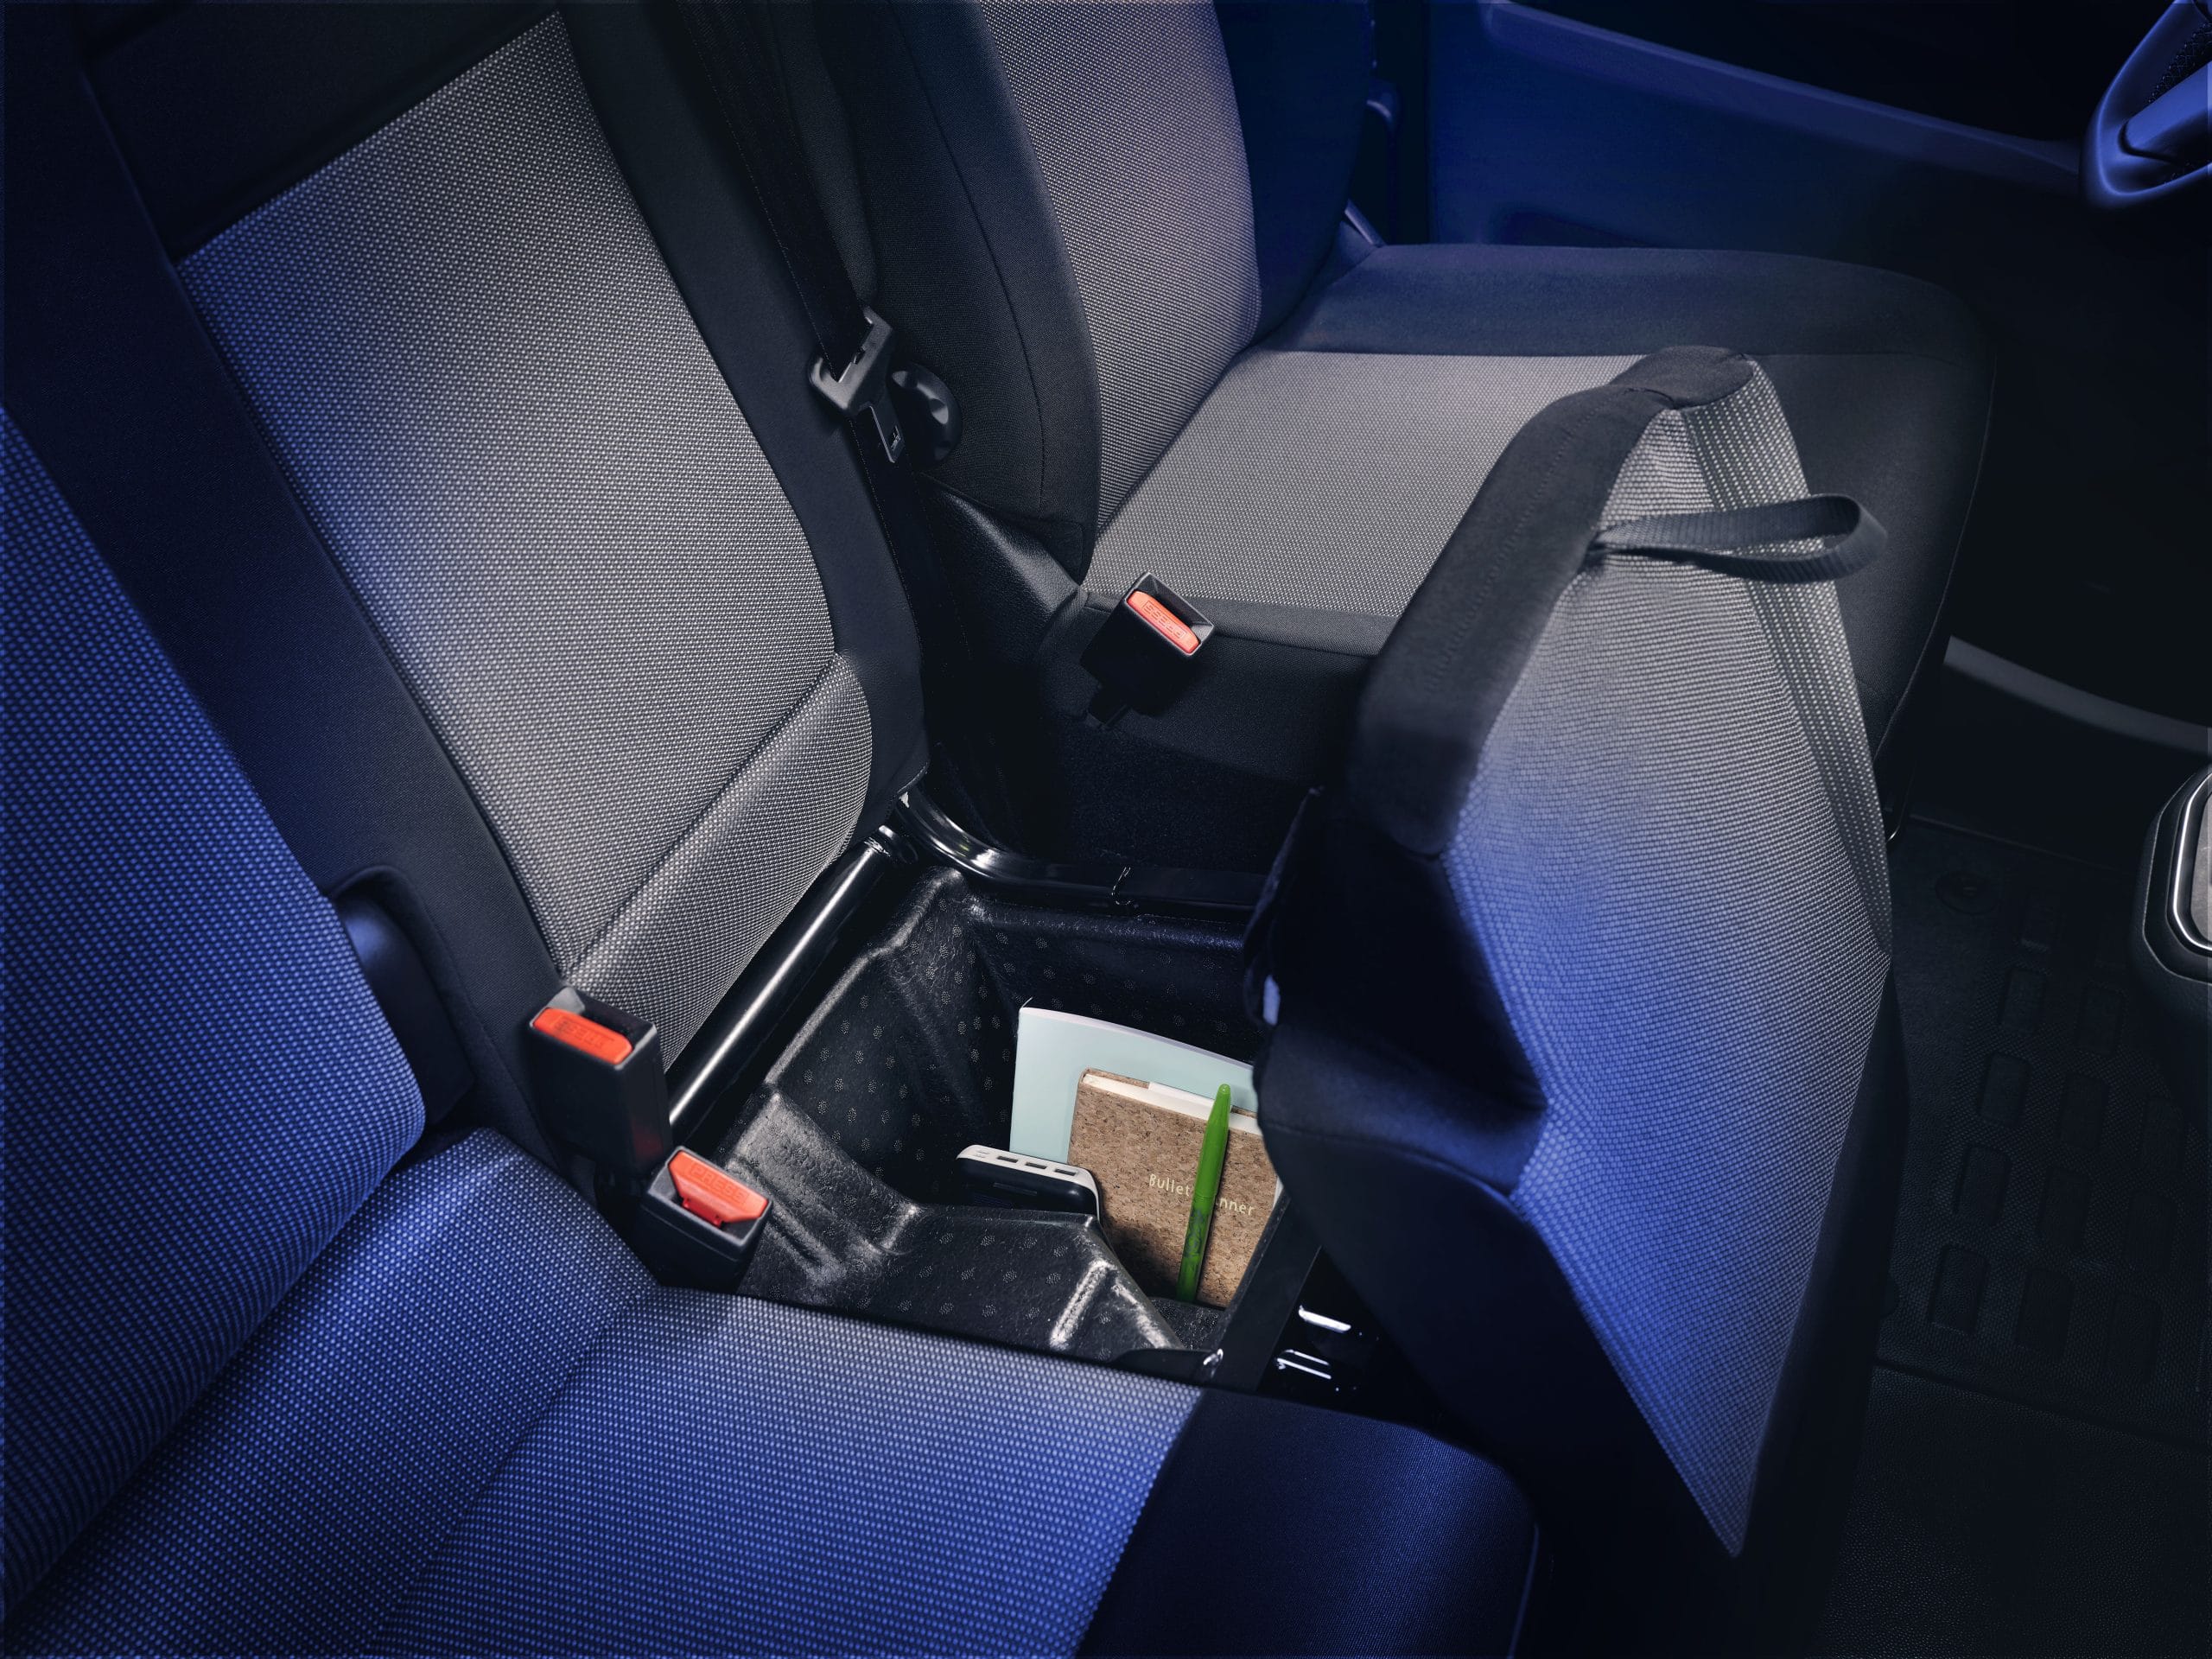 01 Scudo Compartment scaled Pack Tecnico by Fiat Professional : Αυτό που θέλουν οι επαγγελματίες